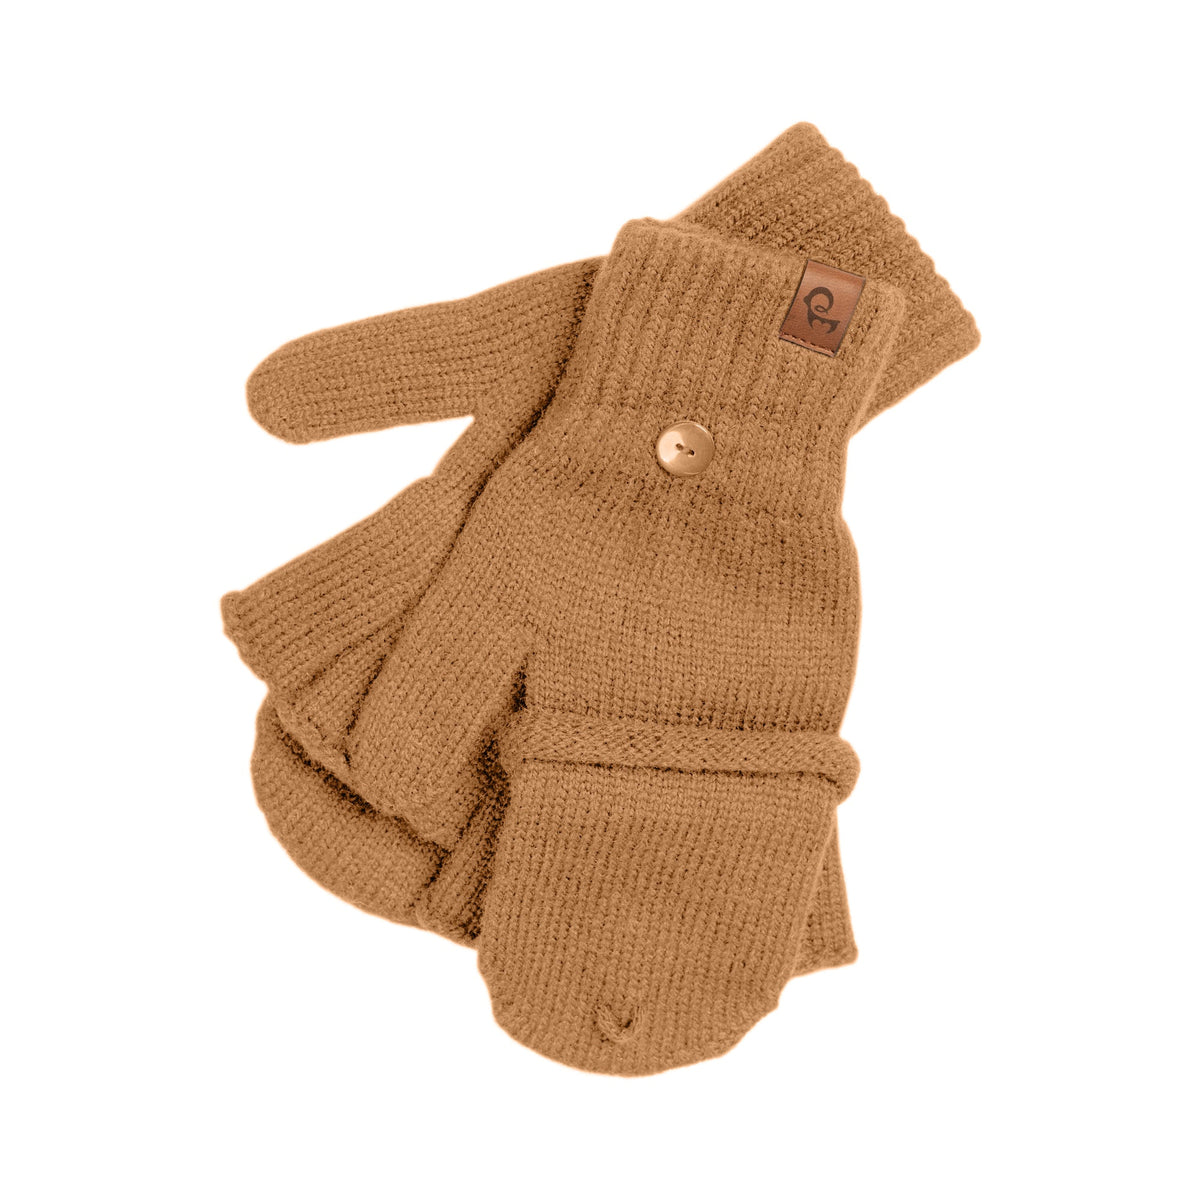 MENIQUE Knit Convertible Gloves Merino